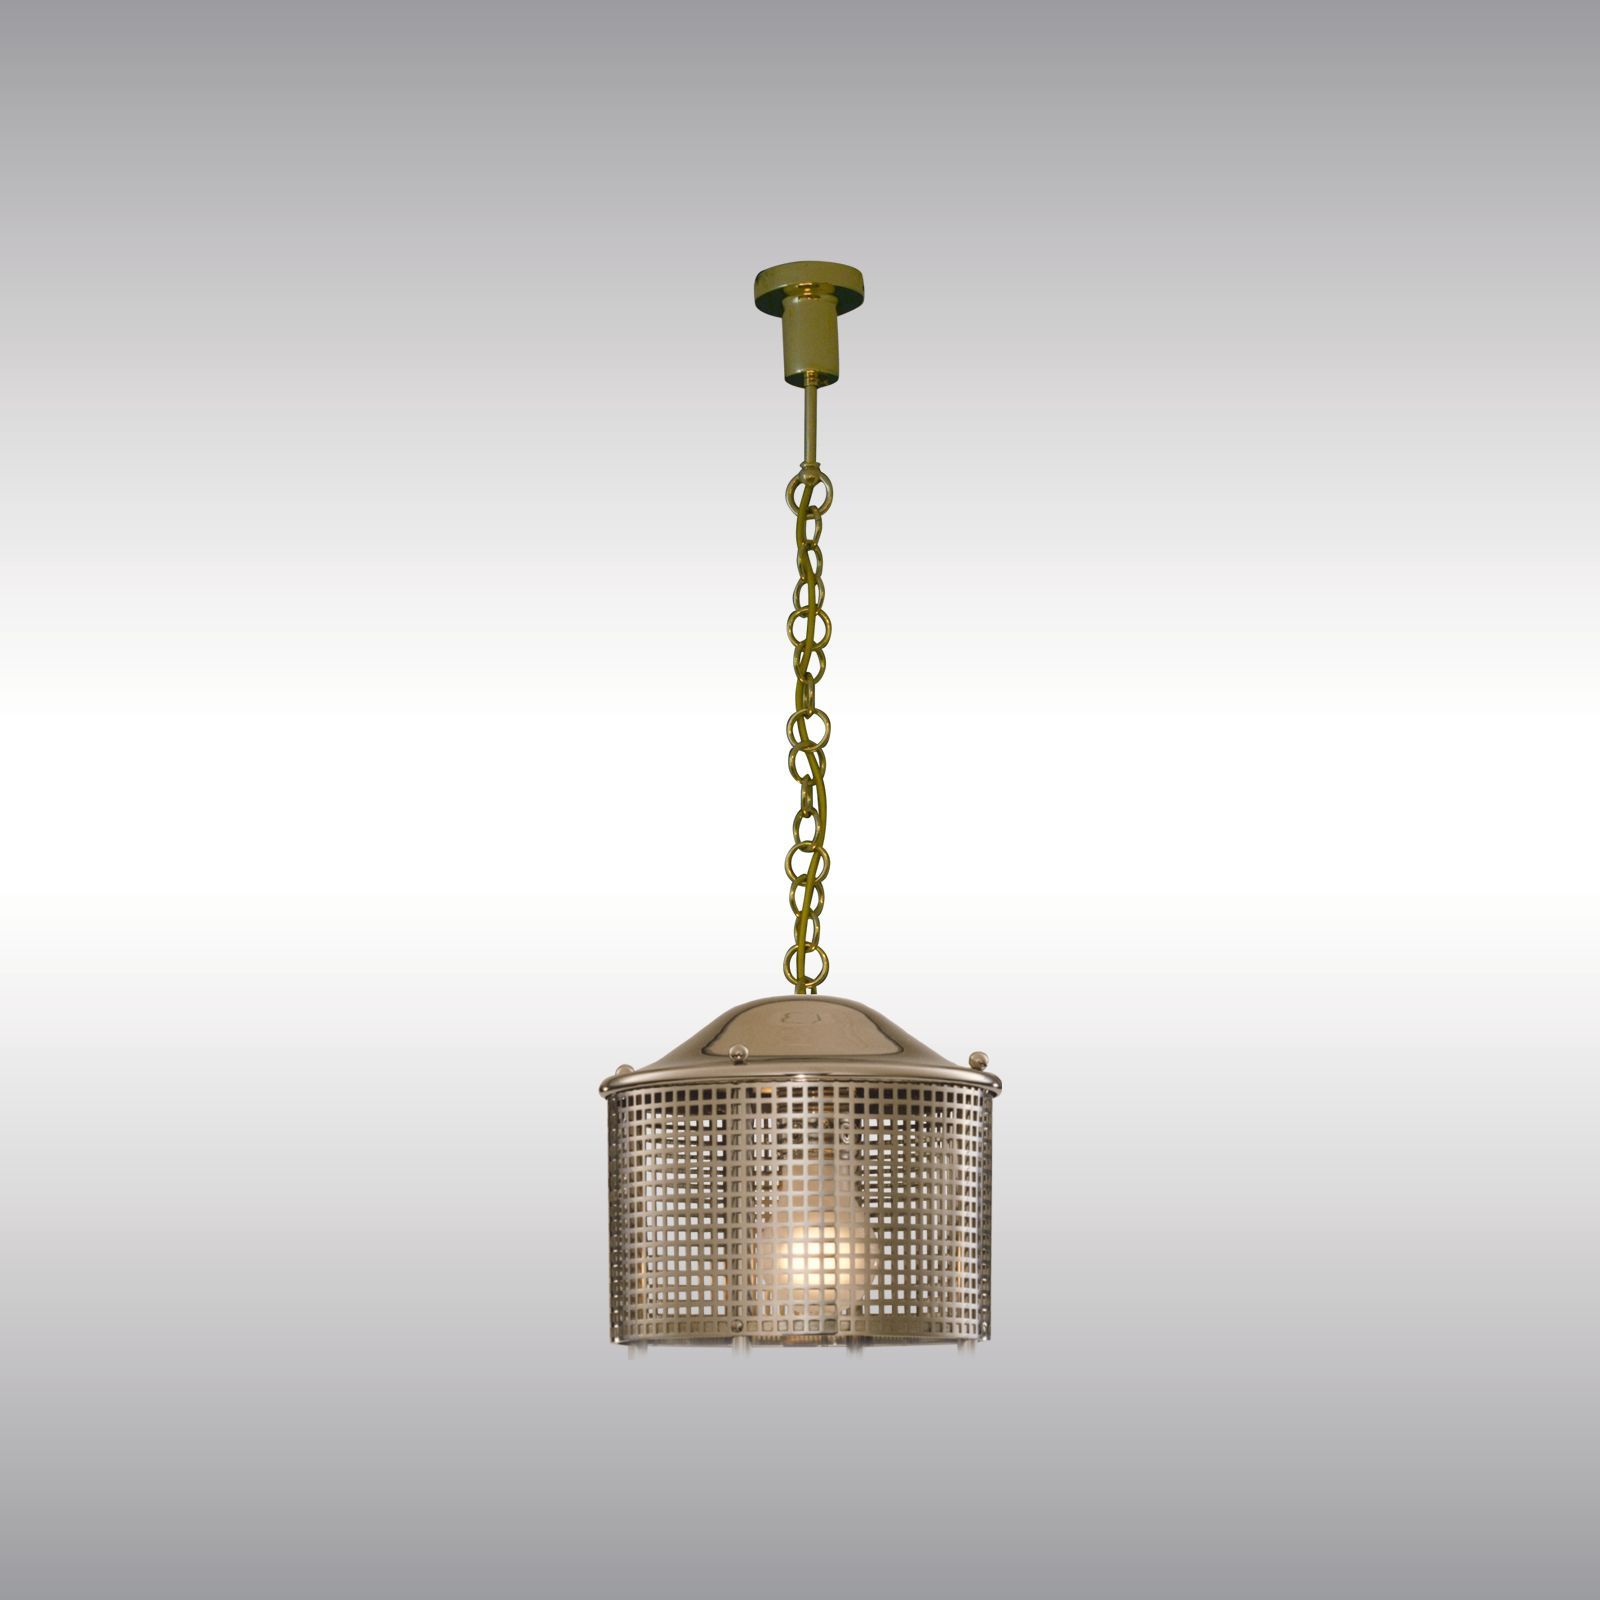 WOKA LAMPS VIENNA - OrderNr.: 21814|JH8-Pendant - Design: Josef Hoffmann